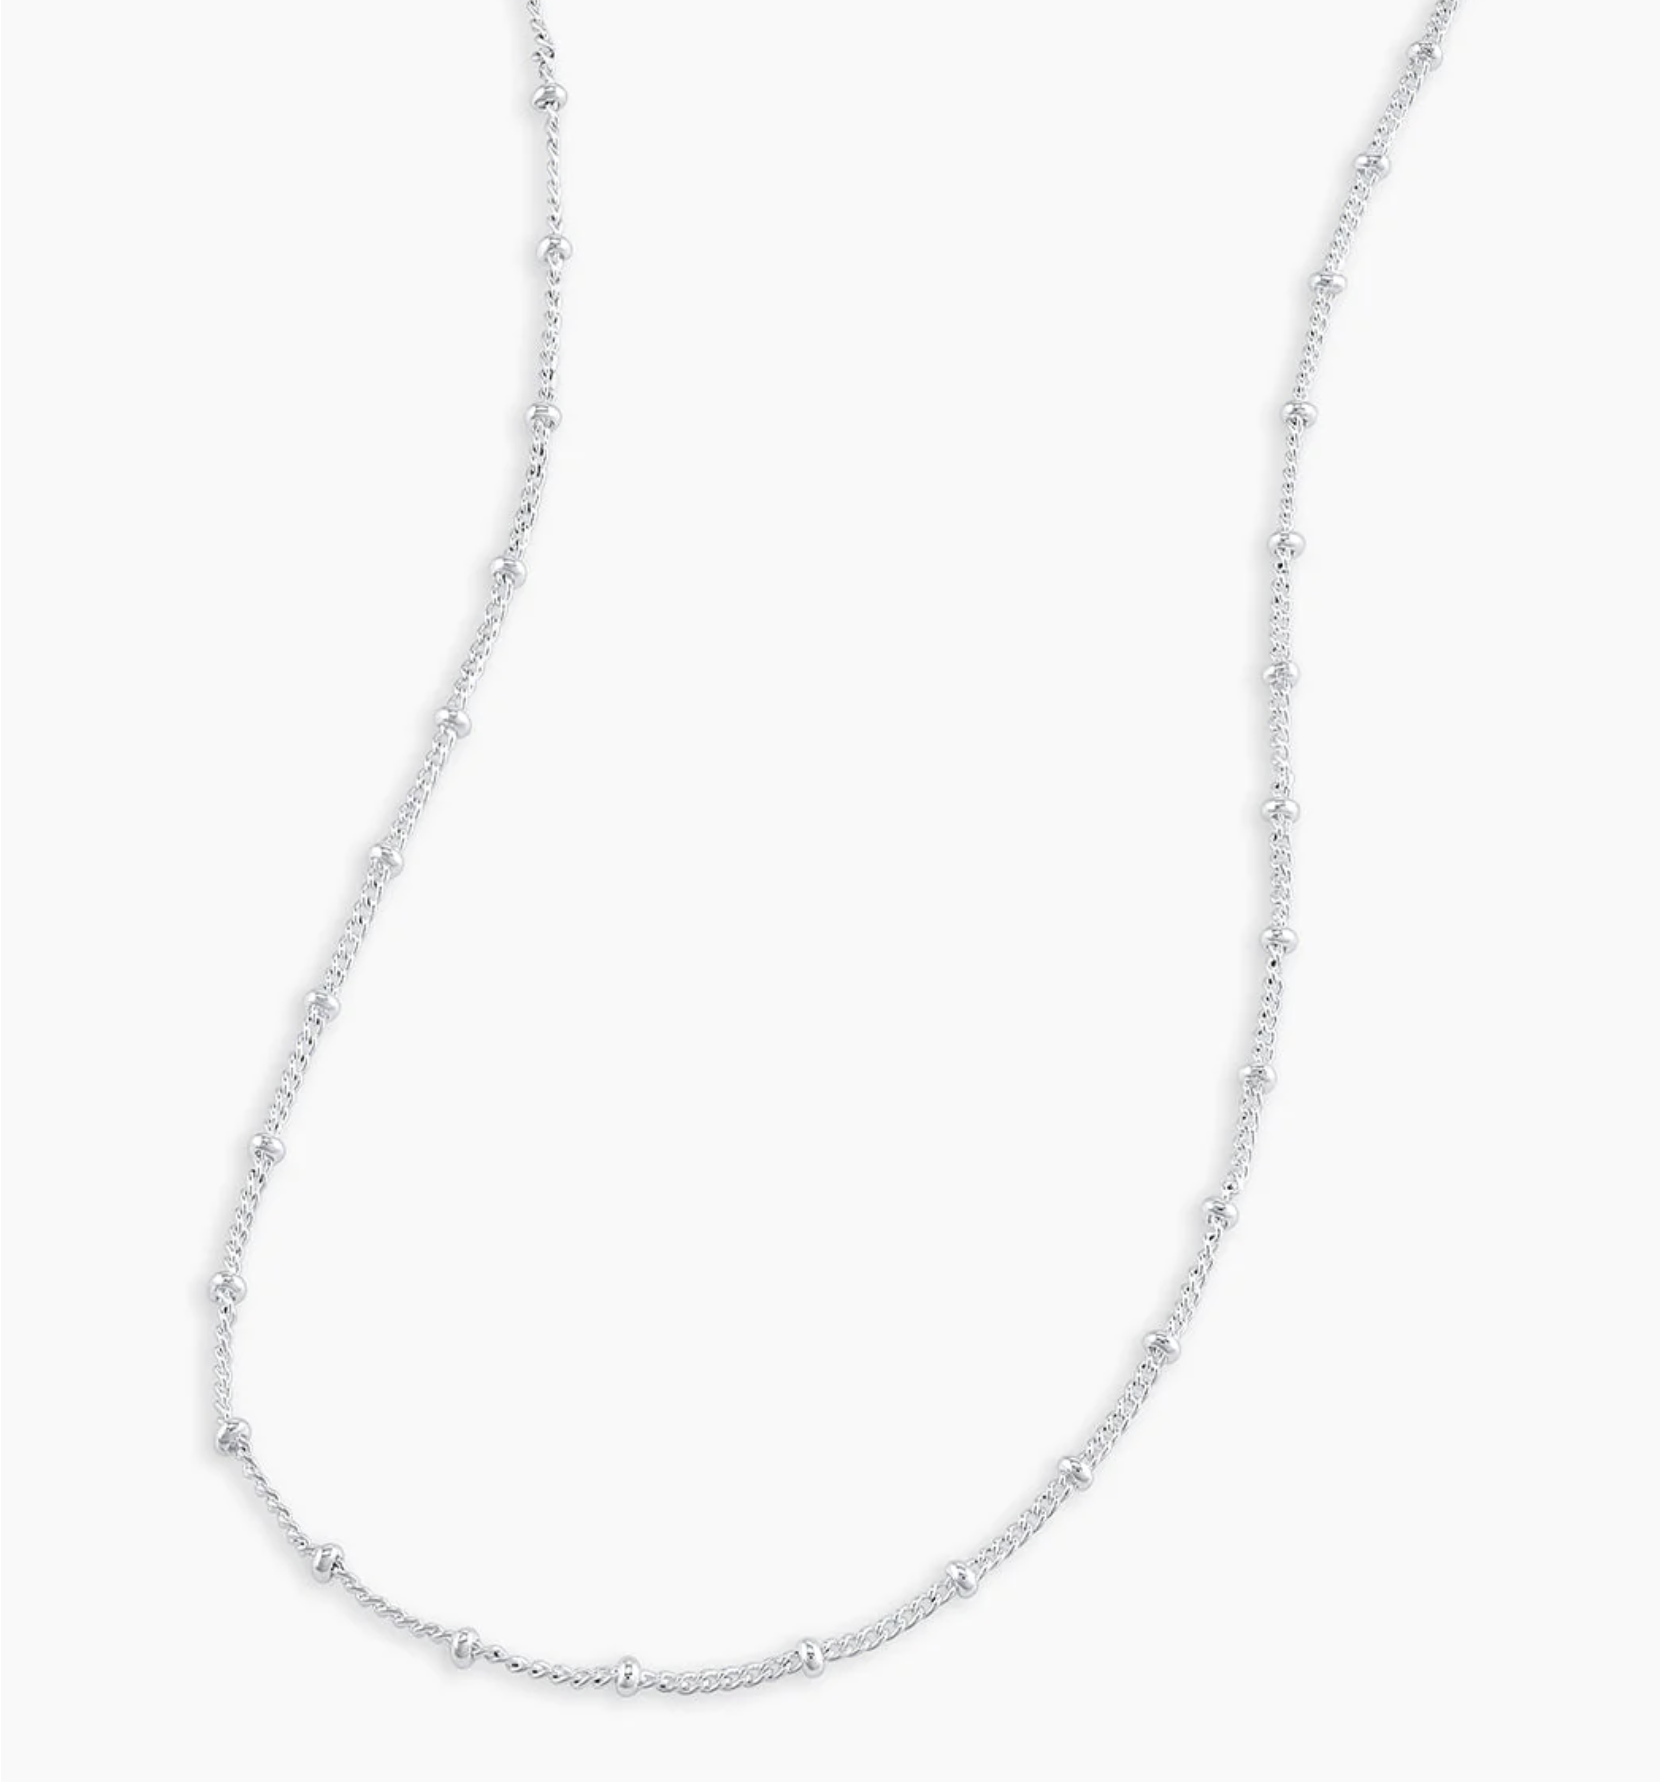 Gorjana Bali Necklace - Silver